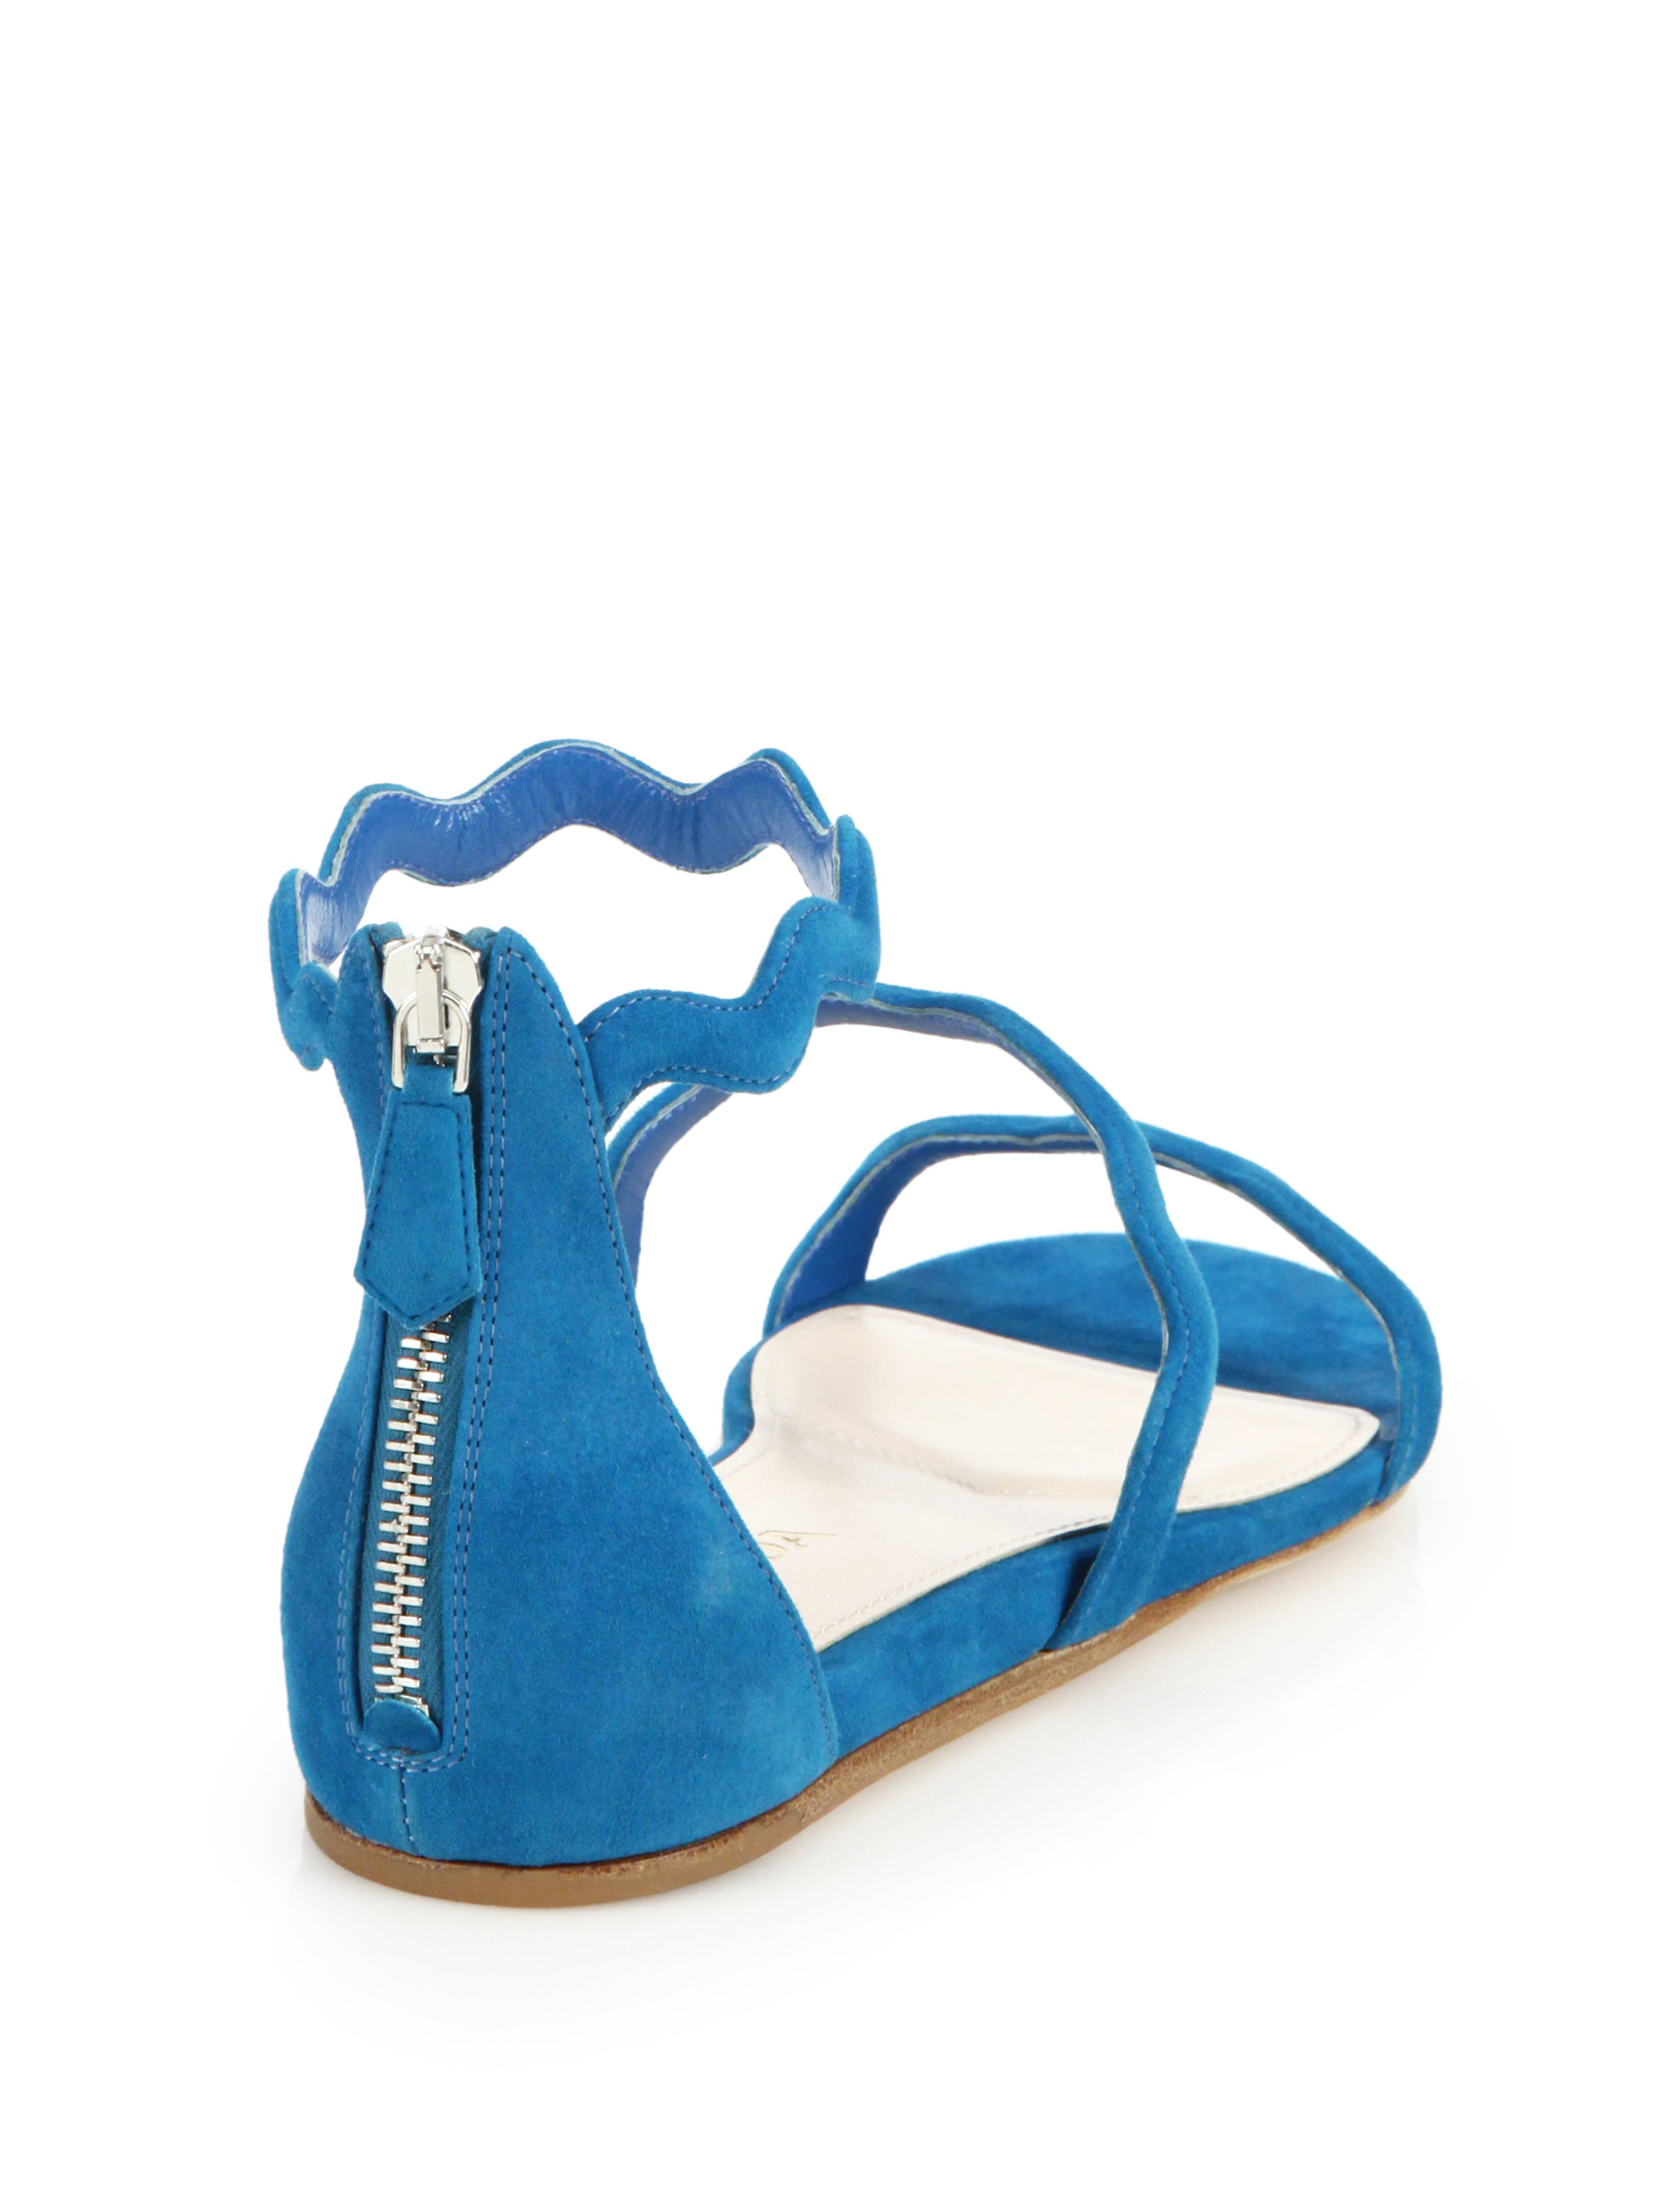 Lyst Prada Scalloped Suede Flat Sandals in Blue